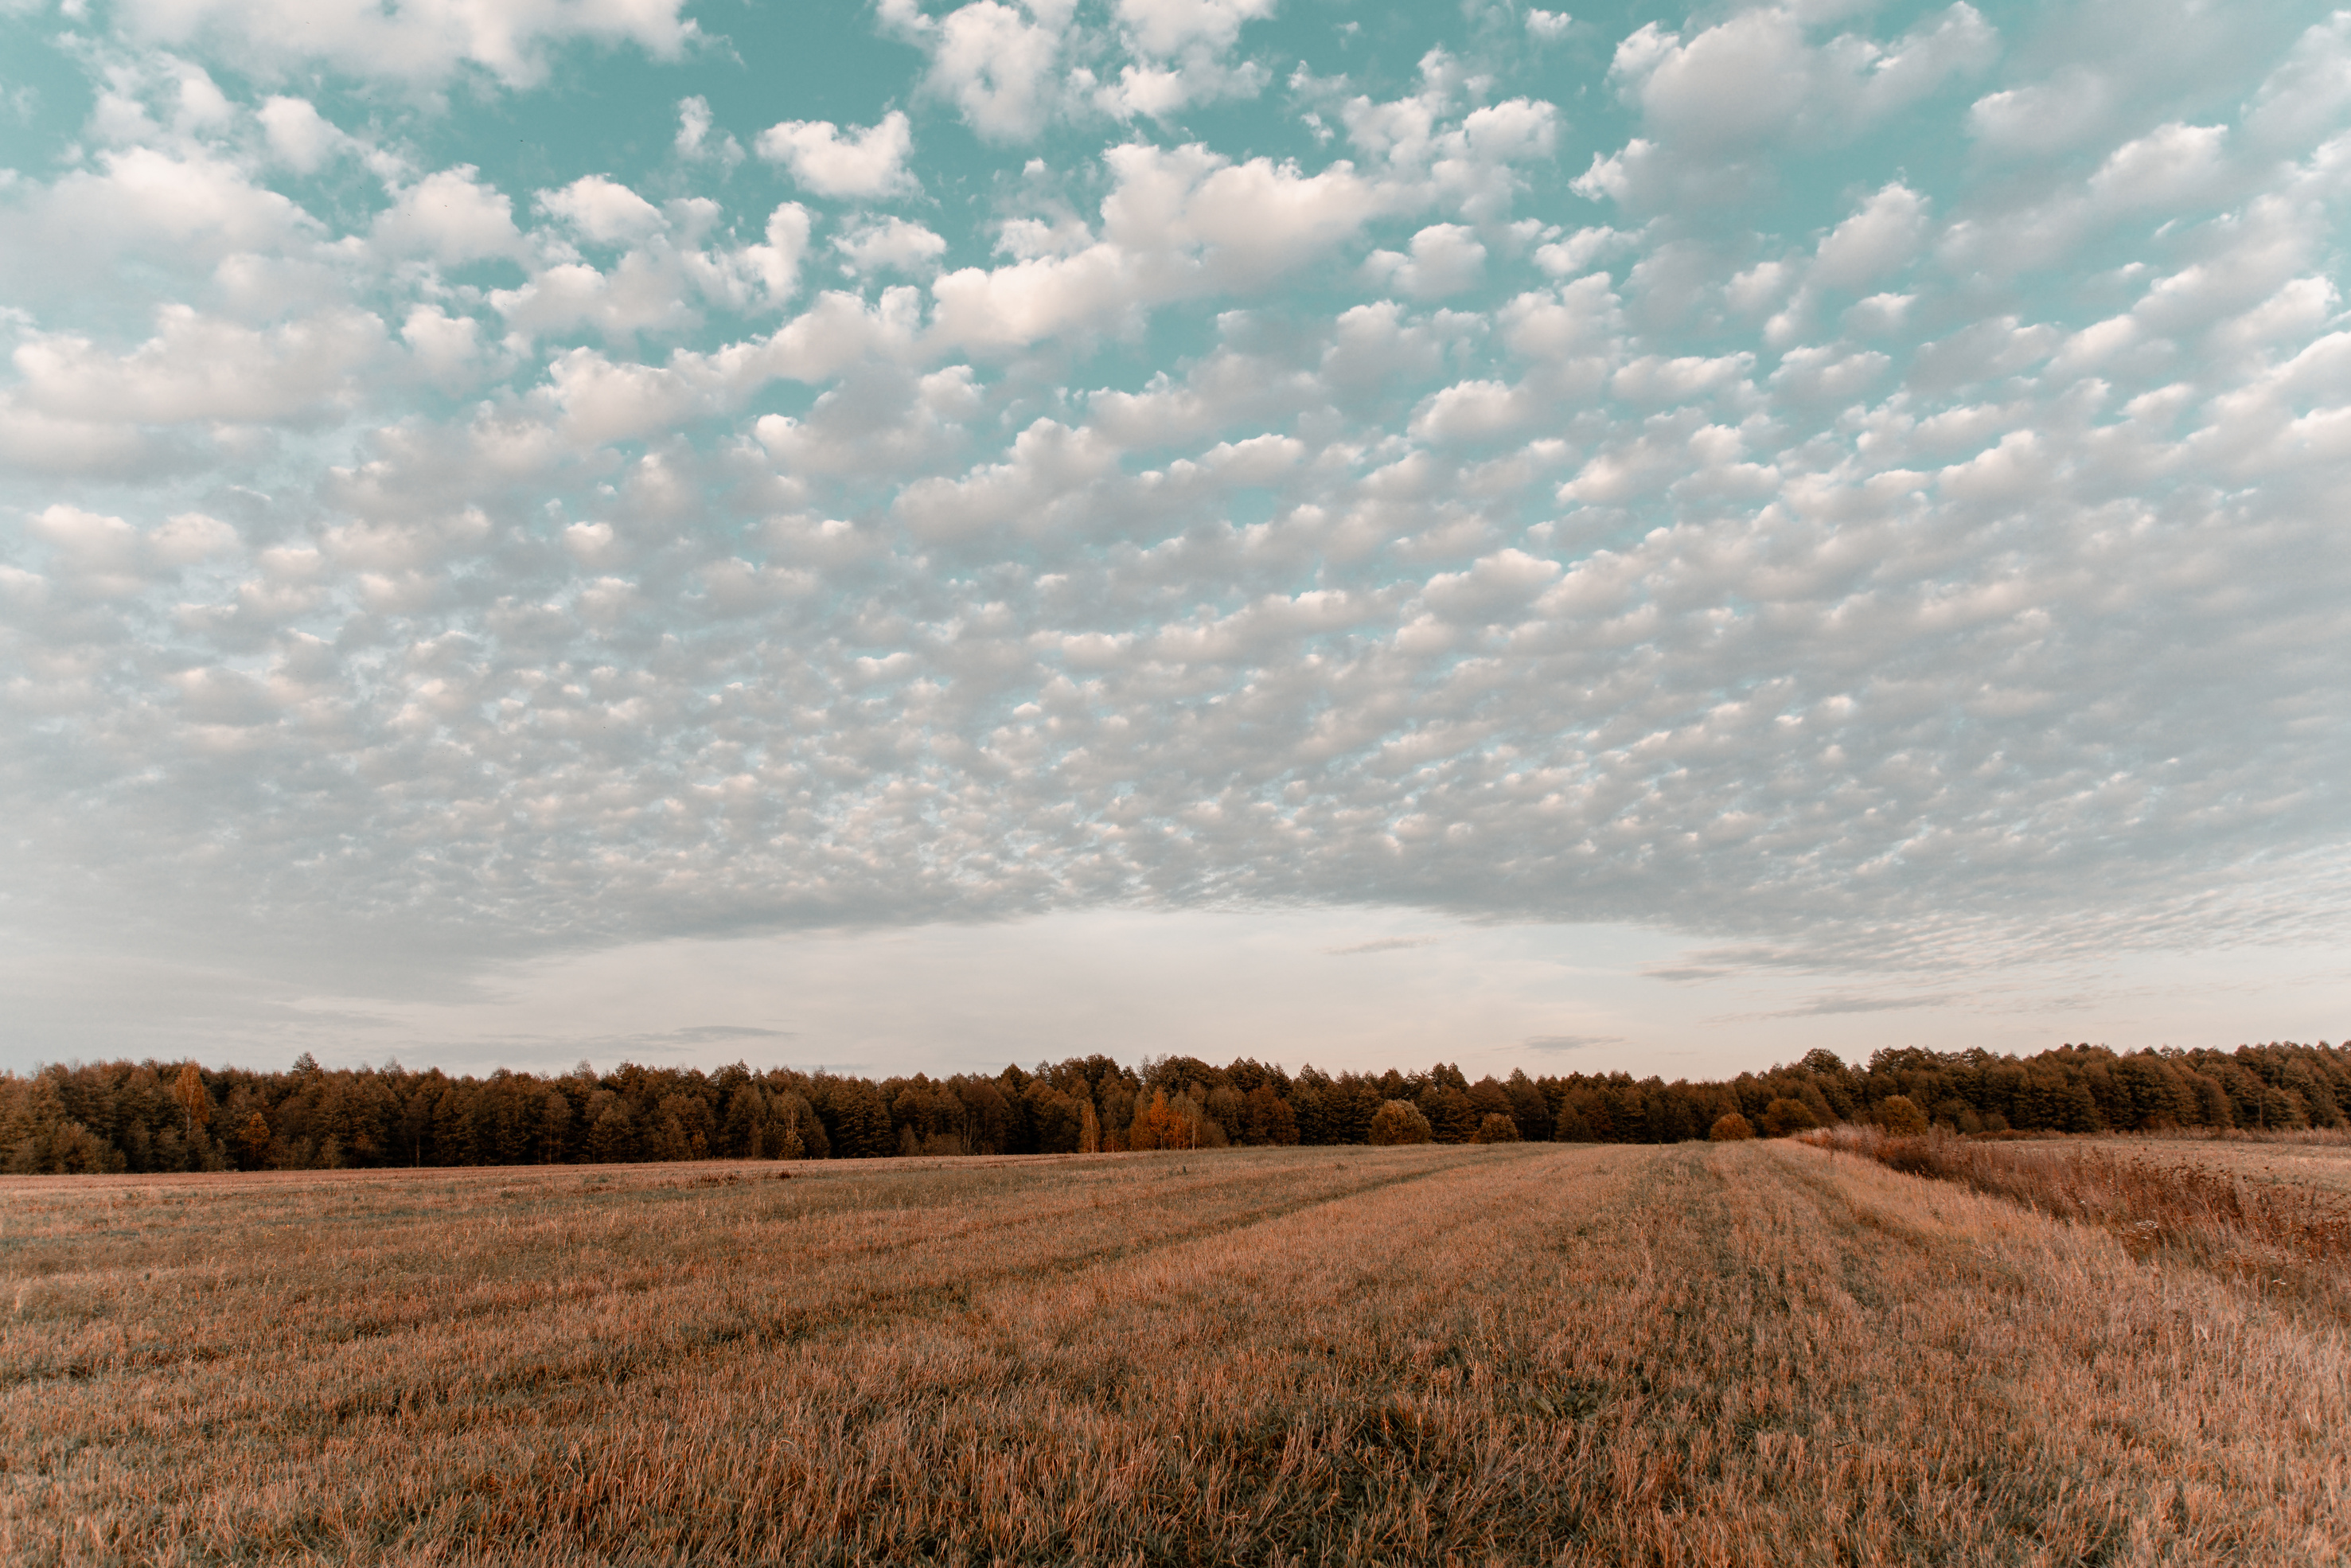 An Agricultural Land Under A Cloudy Sky